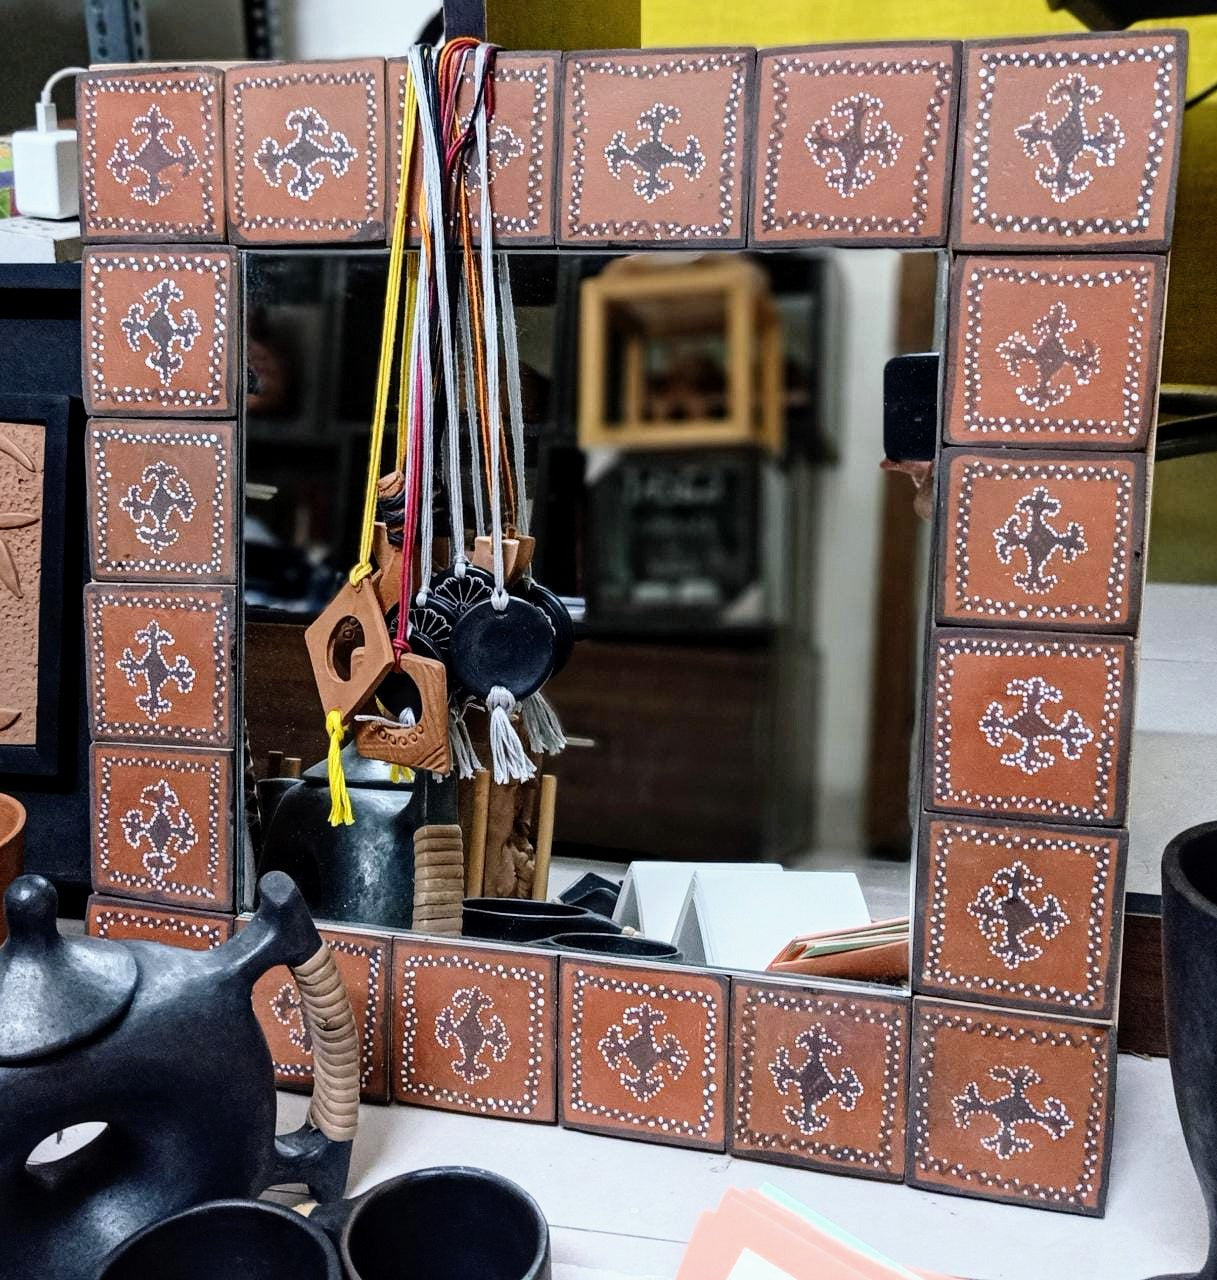 Kutch "माटी नो काम" Painted Pottery Tiles Mirror